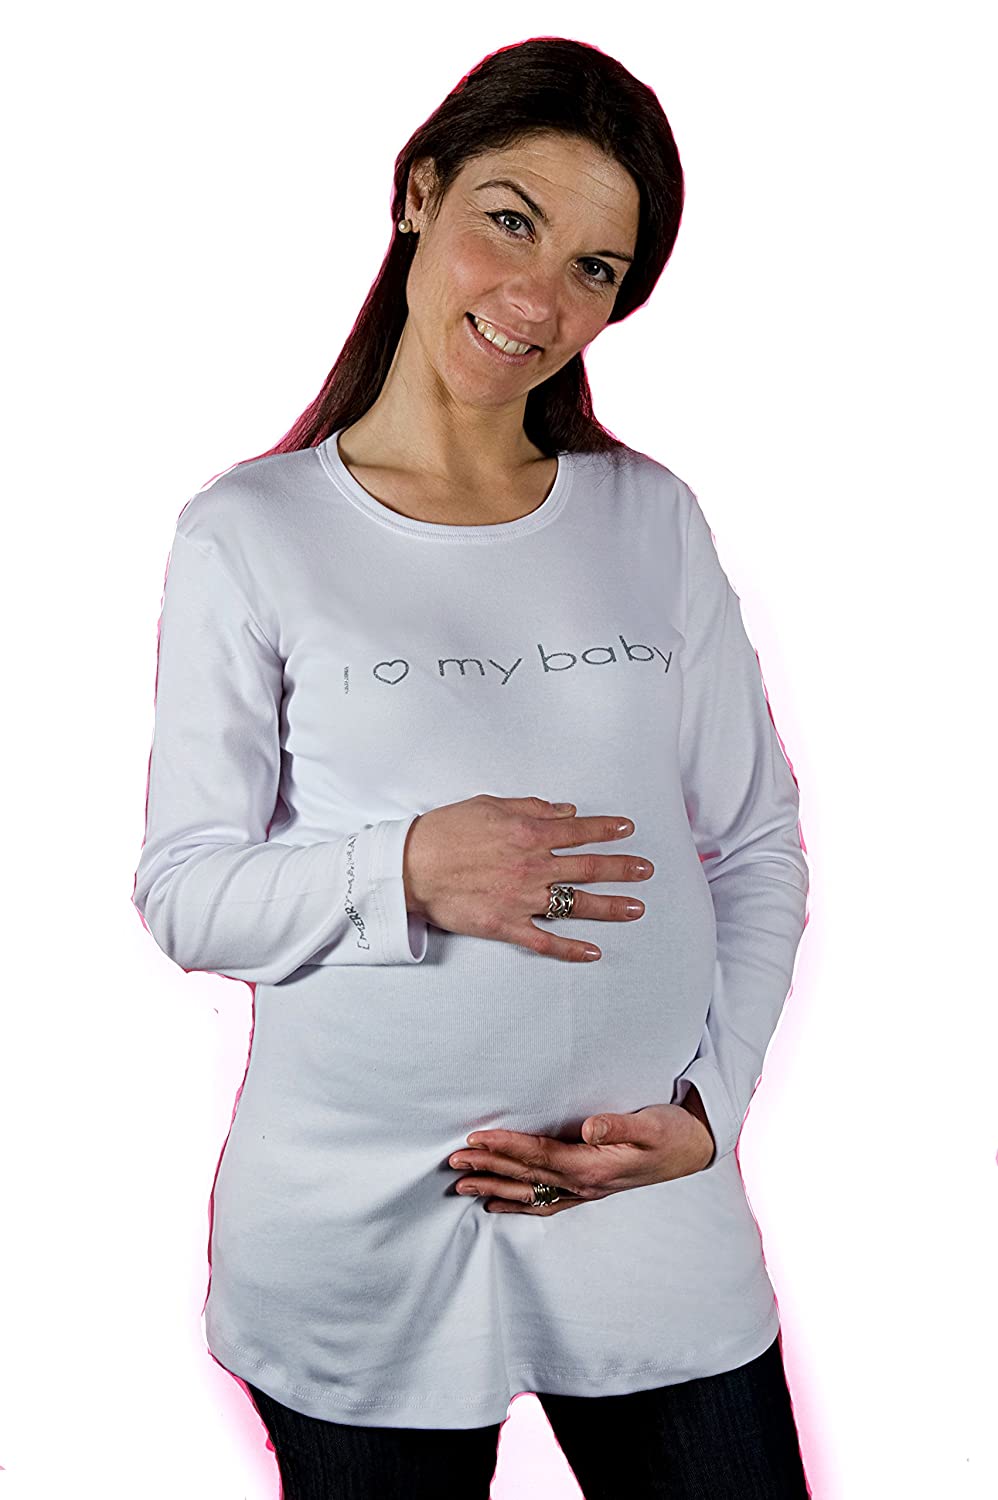 Merrymama Maternity Long Sleeved T-Shirt – White, One Size